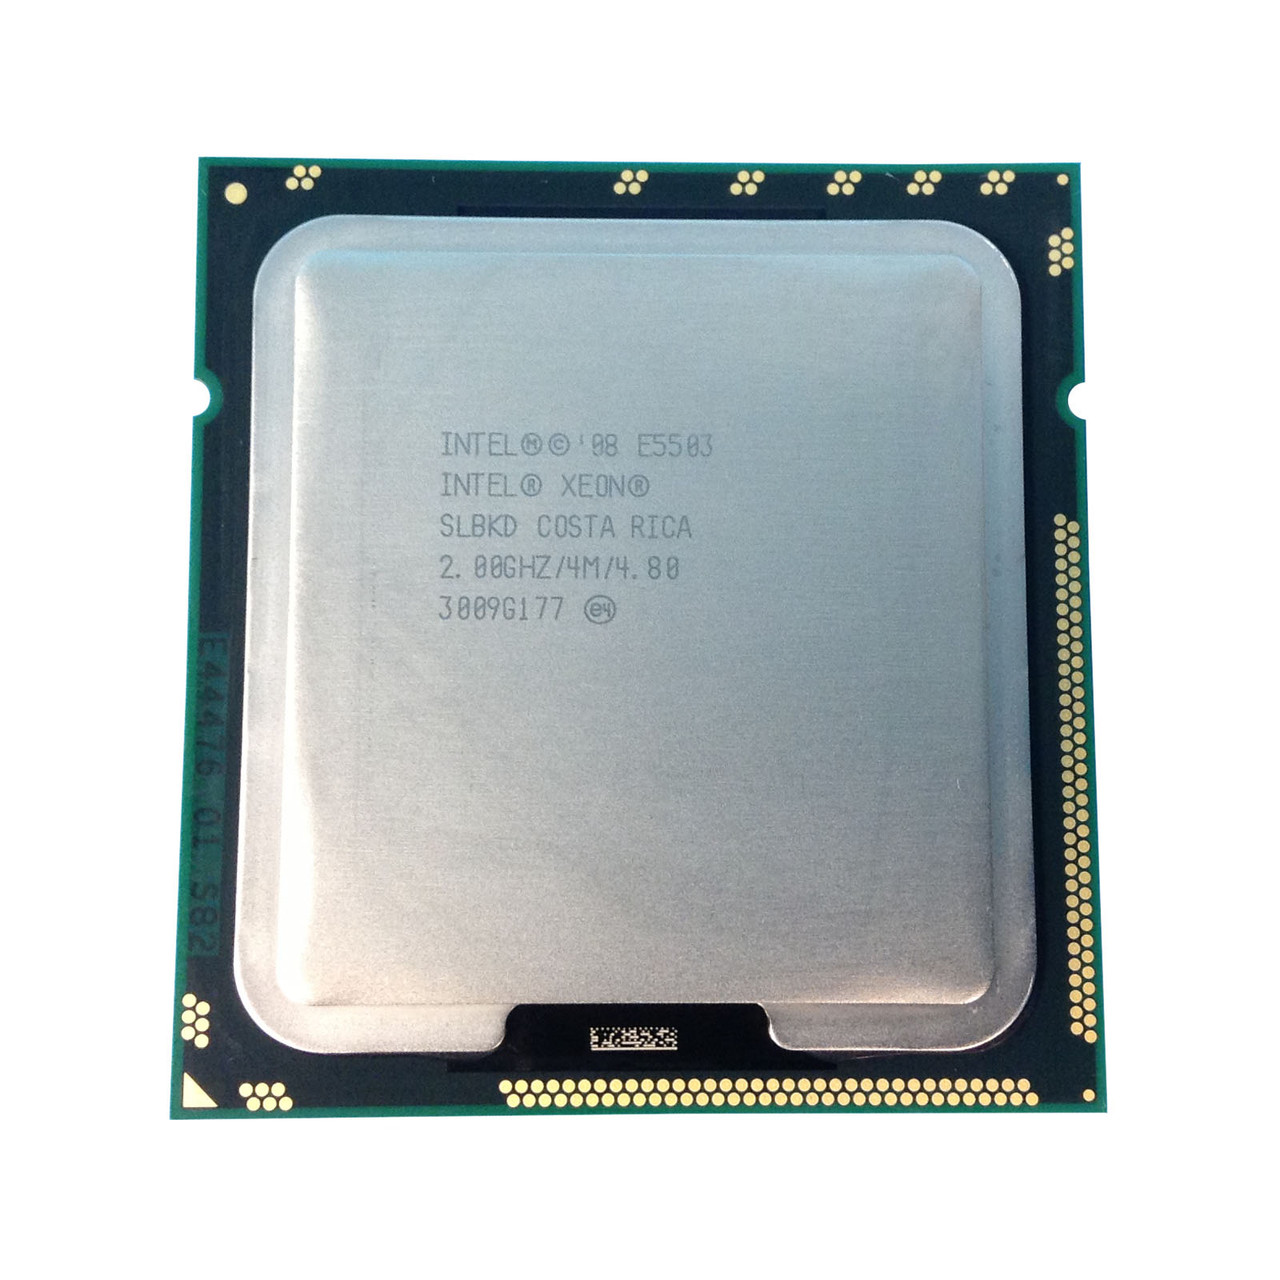 Dell NDG4G Xeon E5503 DC 2.0Ghz 4MB 4.80GTs Processor